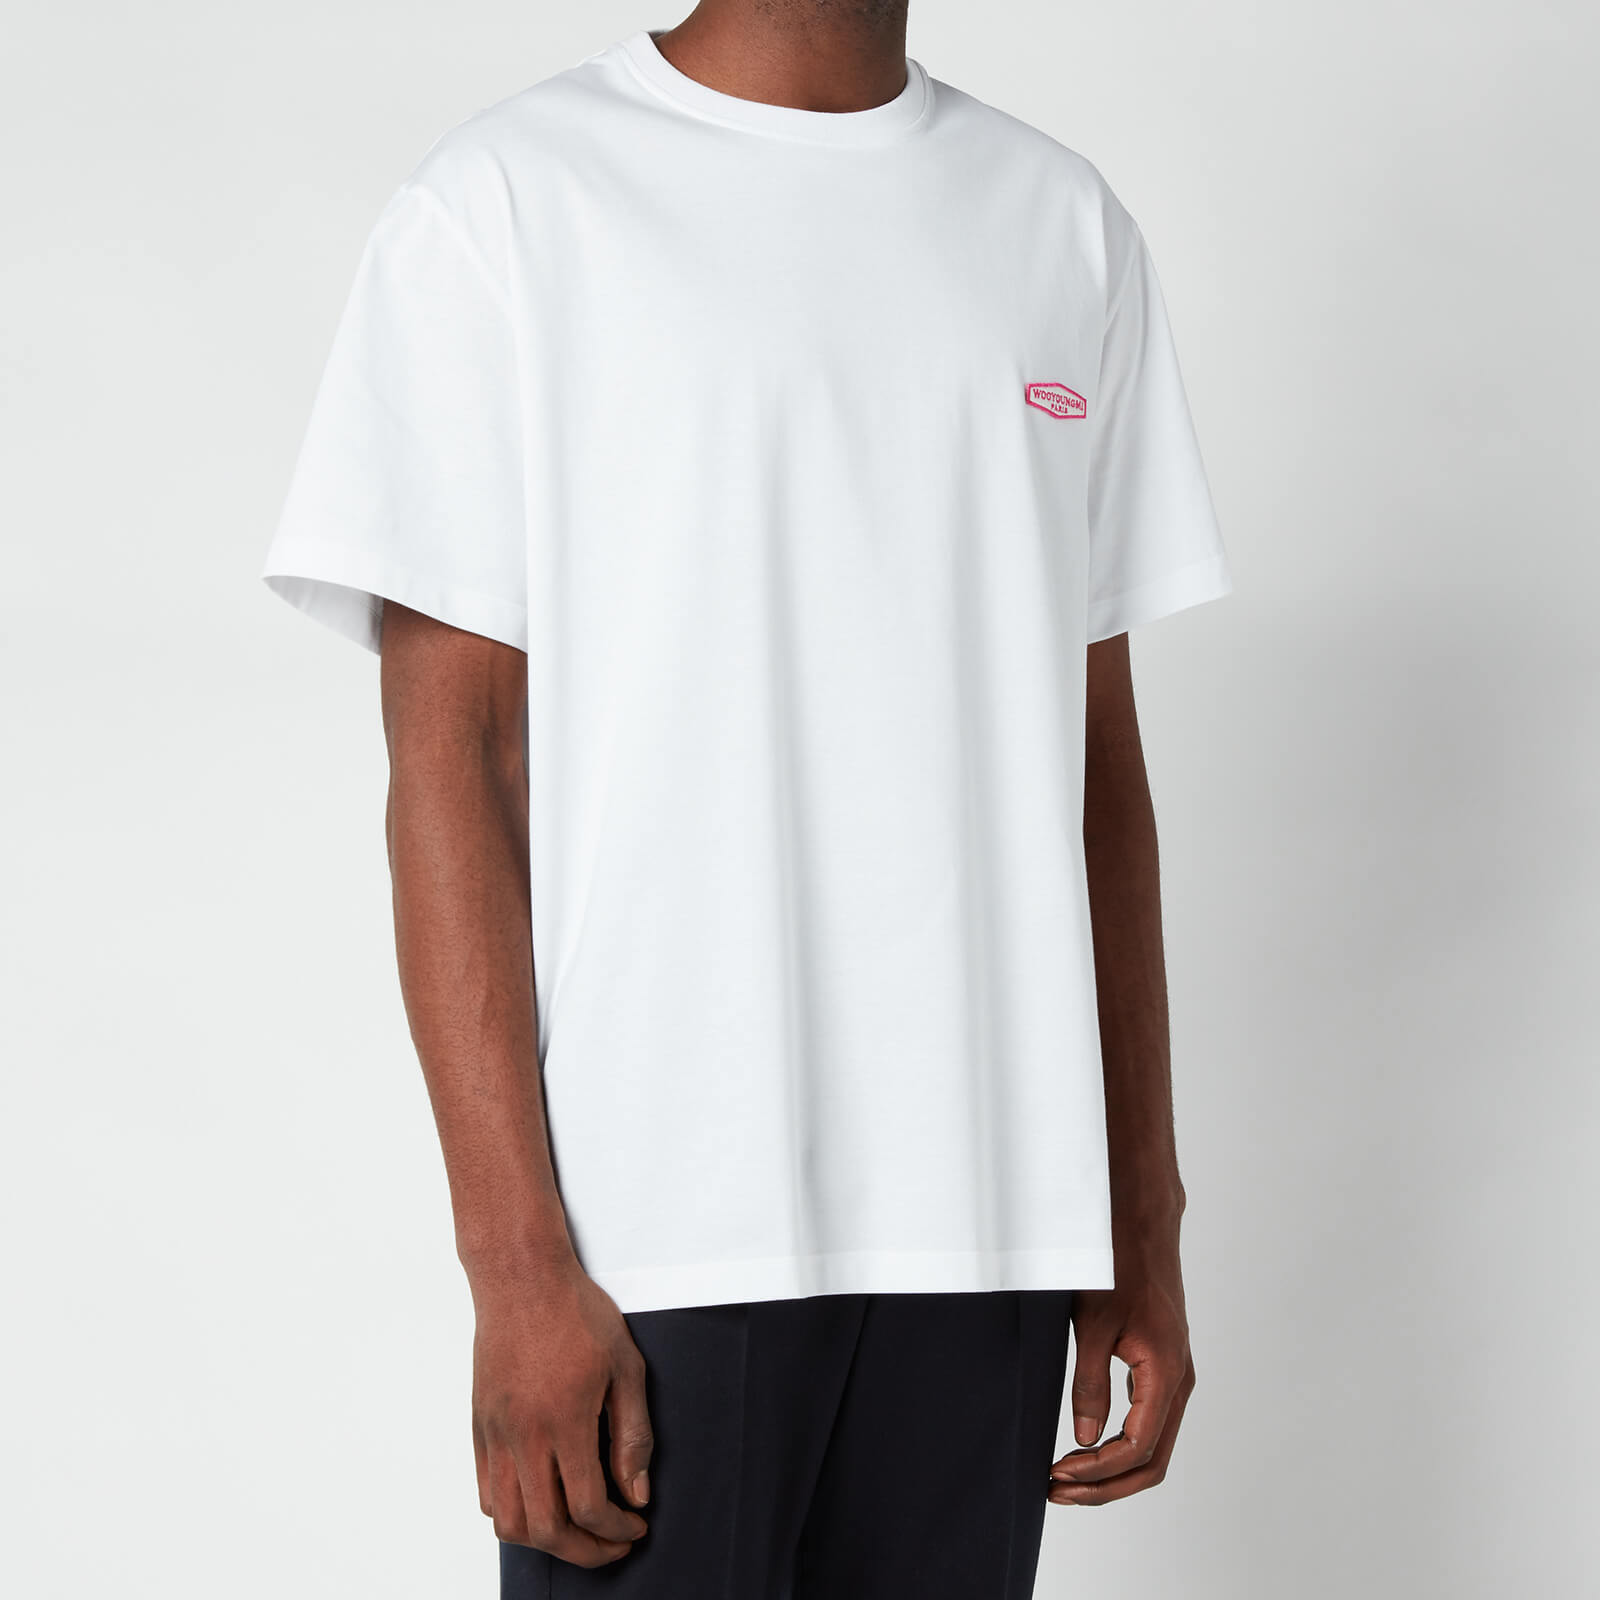 Wooyoungmi Men's Basic Back Logo T-Shirt - White/Pink - 50/L